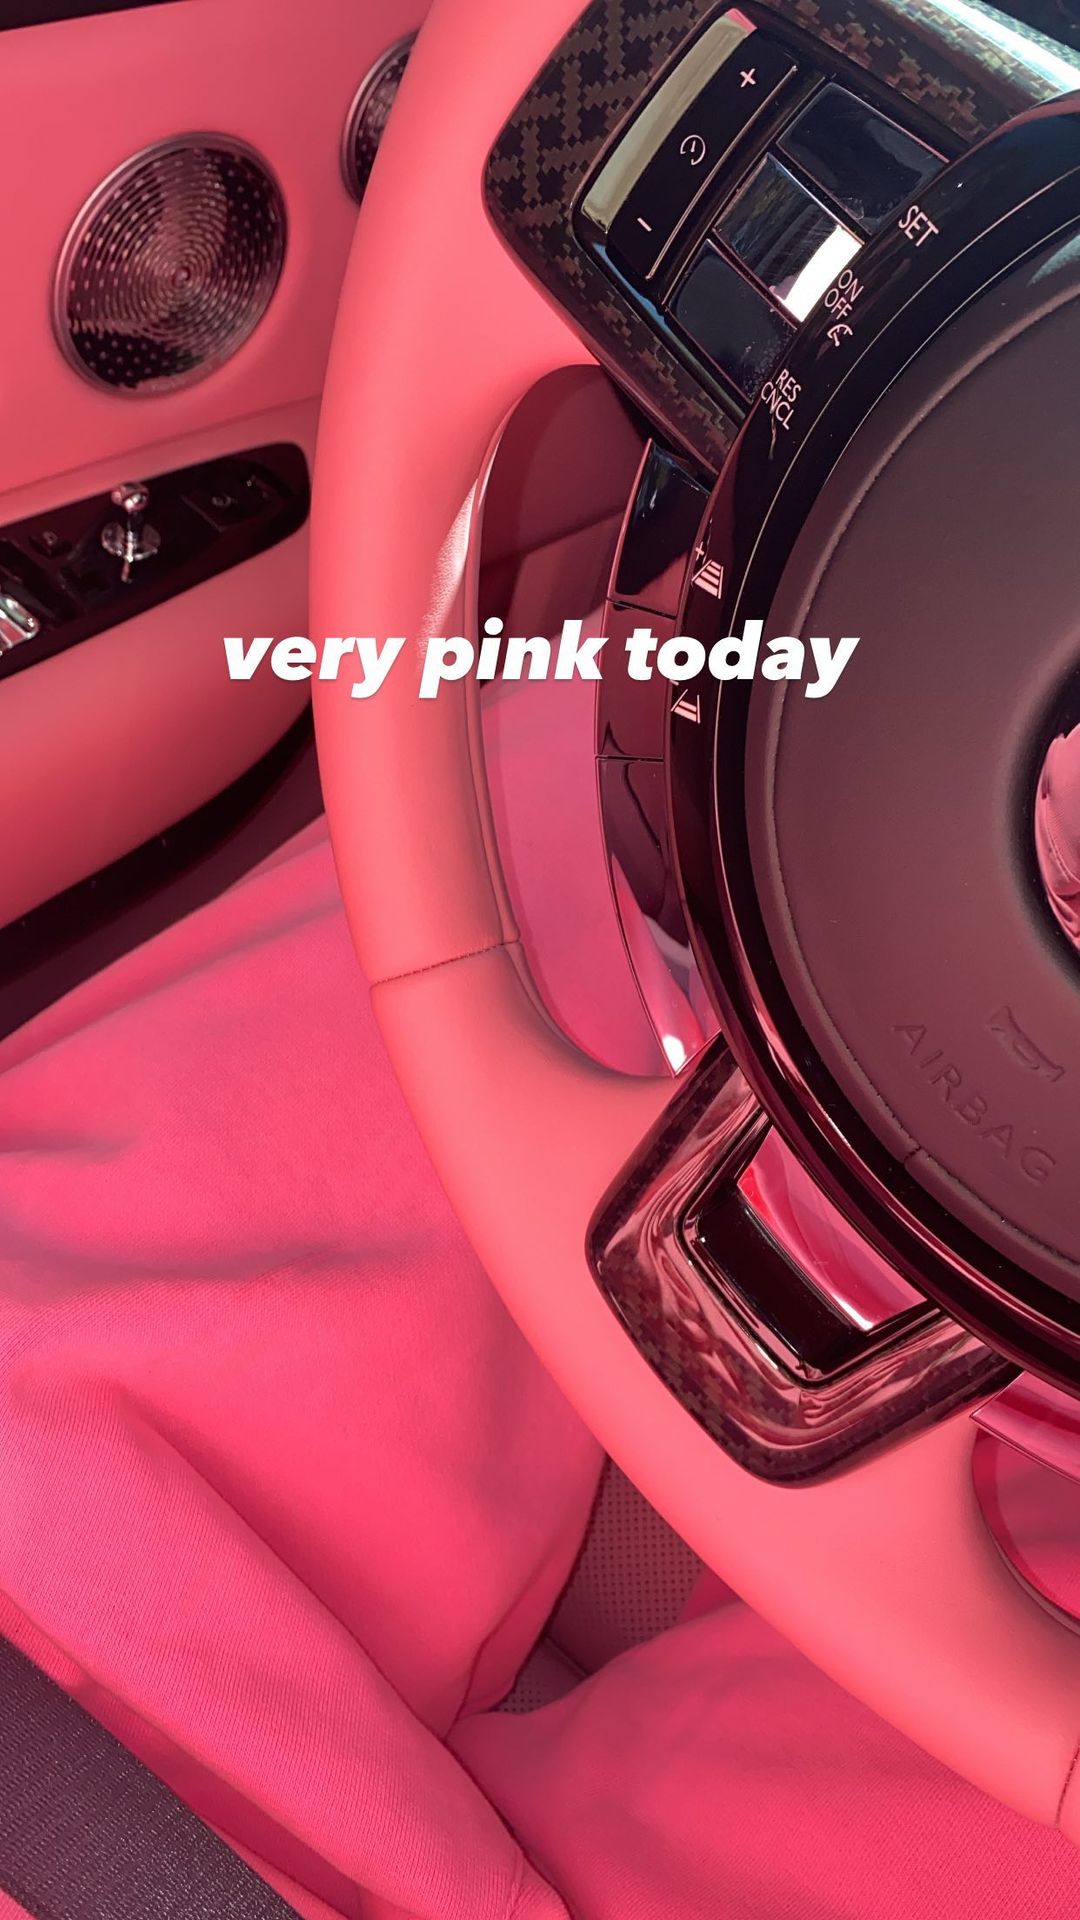 Kylie Jenner slammed for flaunting new custom pink Rolls Royce SUV during  pandemic  The Irish Sun  The Irish Sun